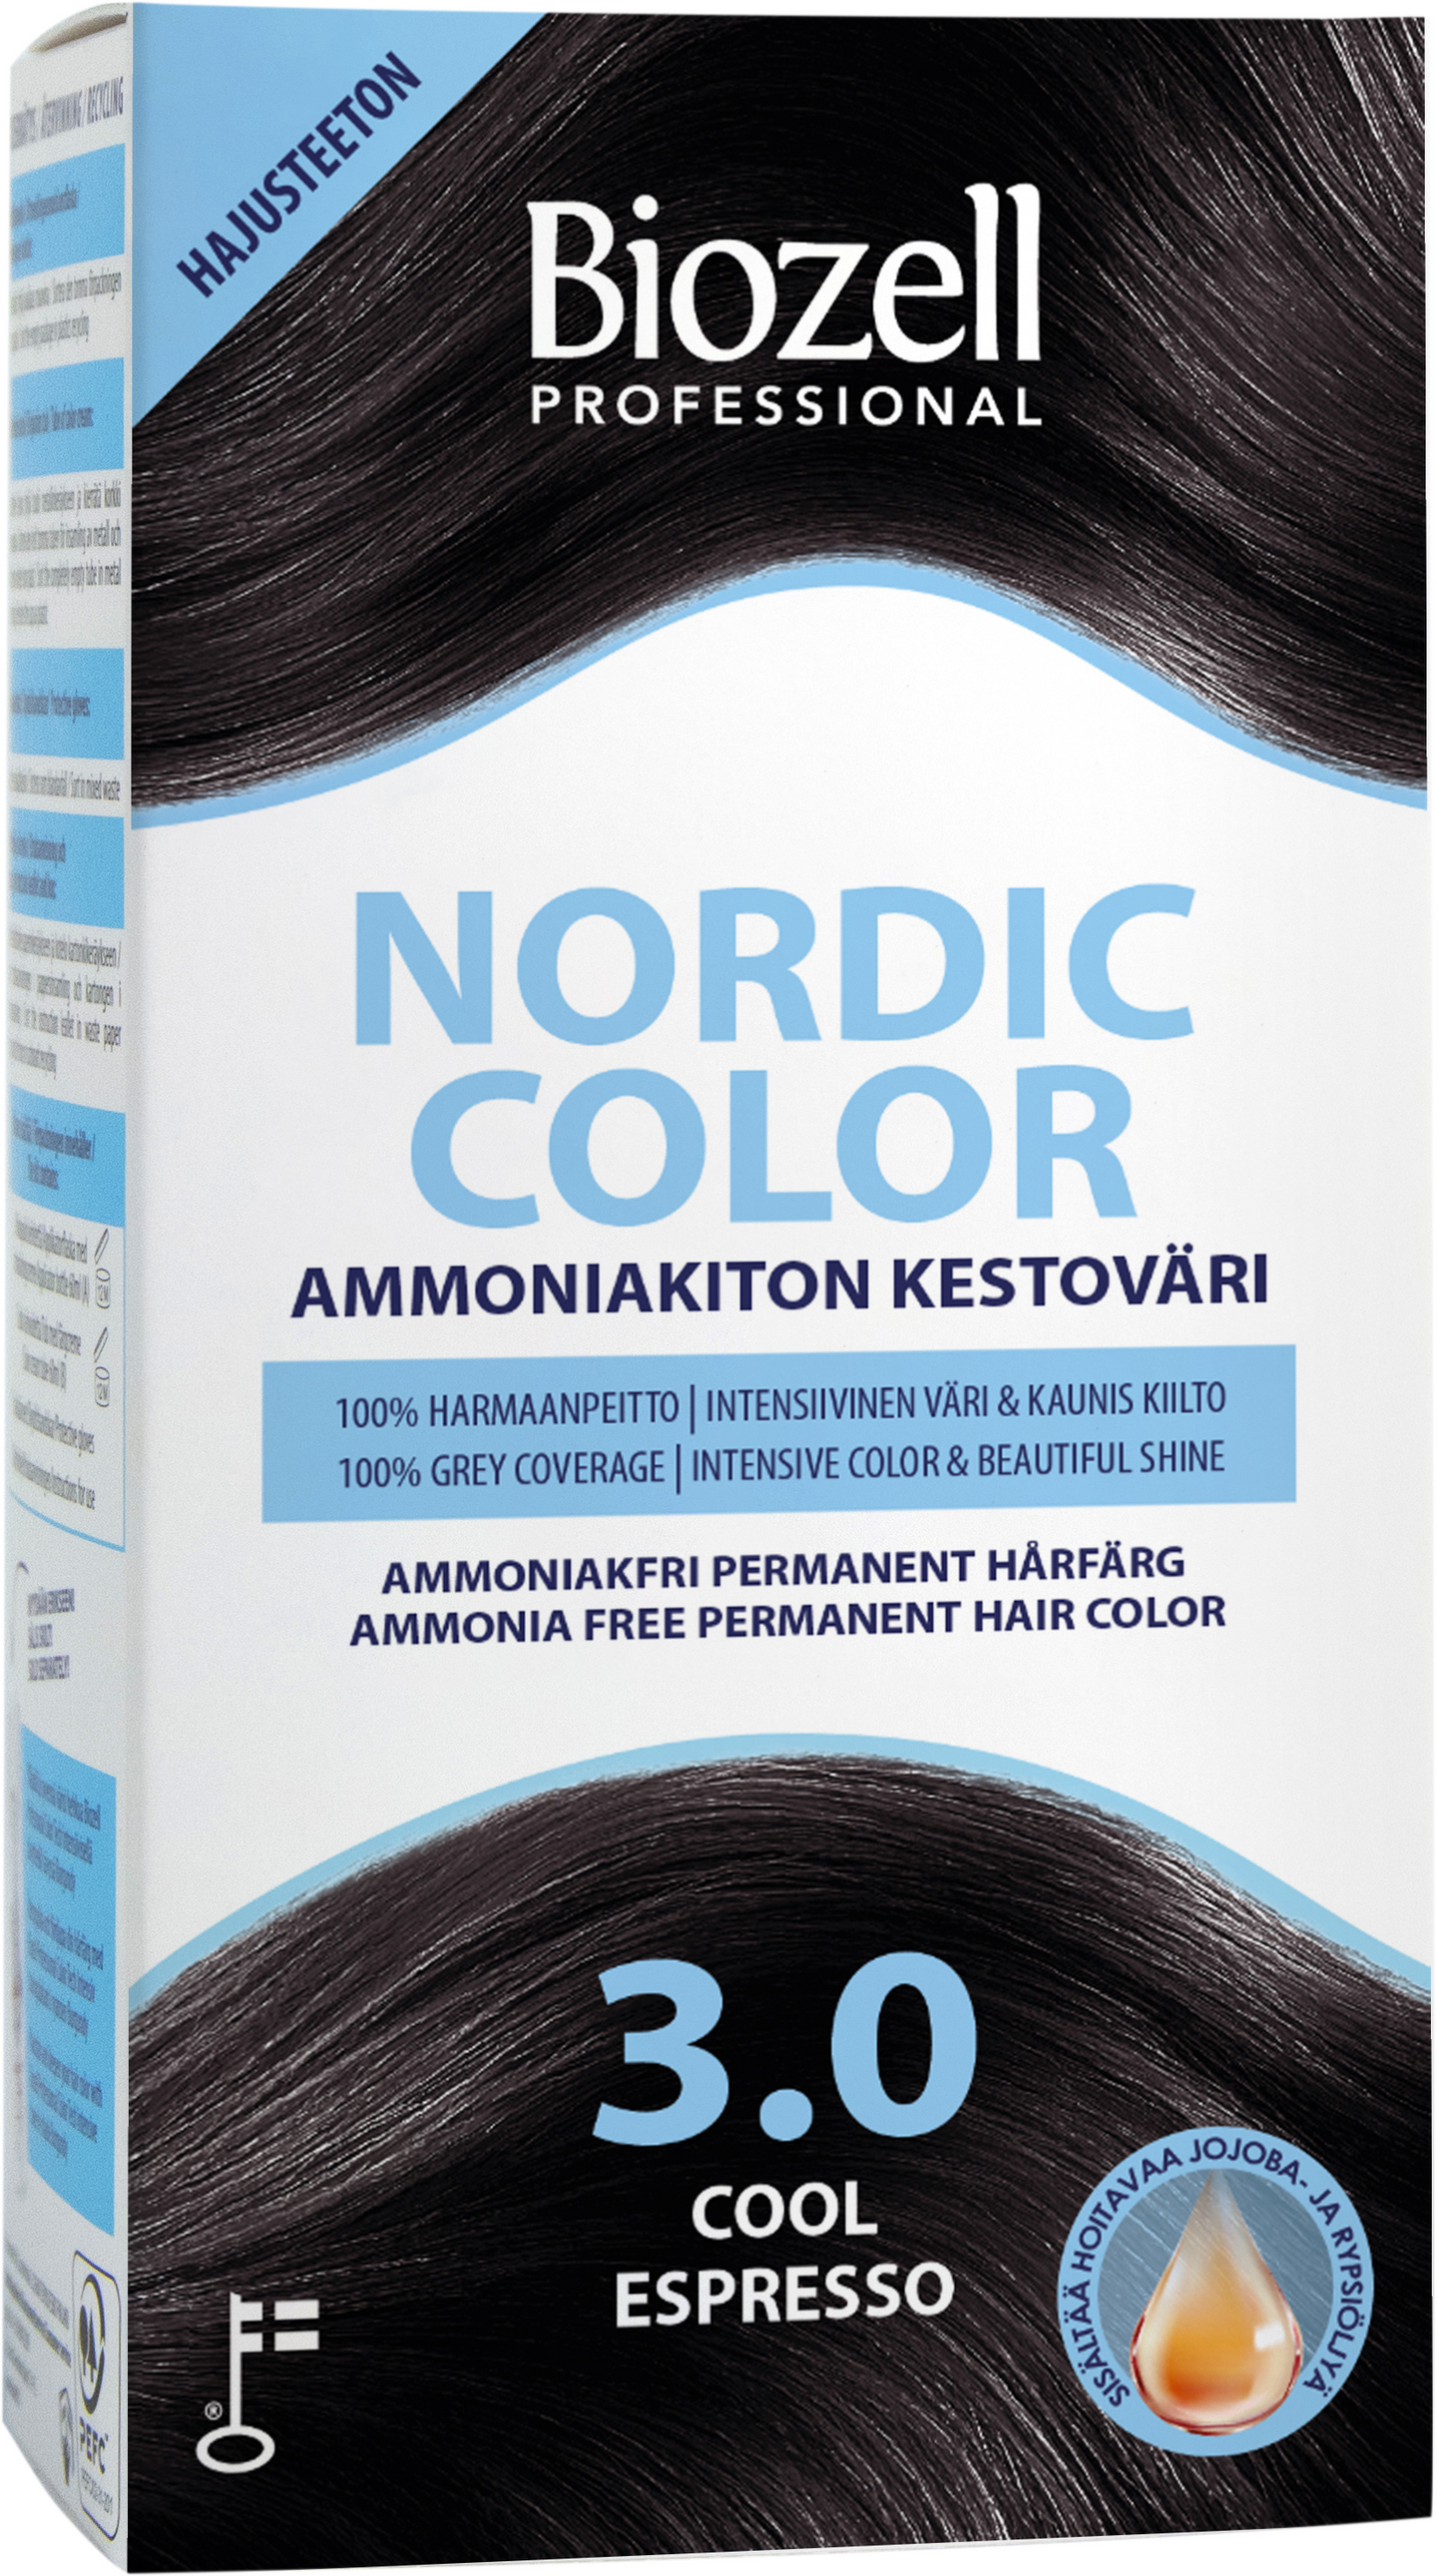 Biozell Professional Nordic Color kestoväri 3.0 2x60ml Cool Espresso ammoniakiton